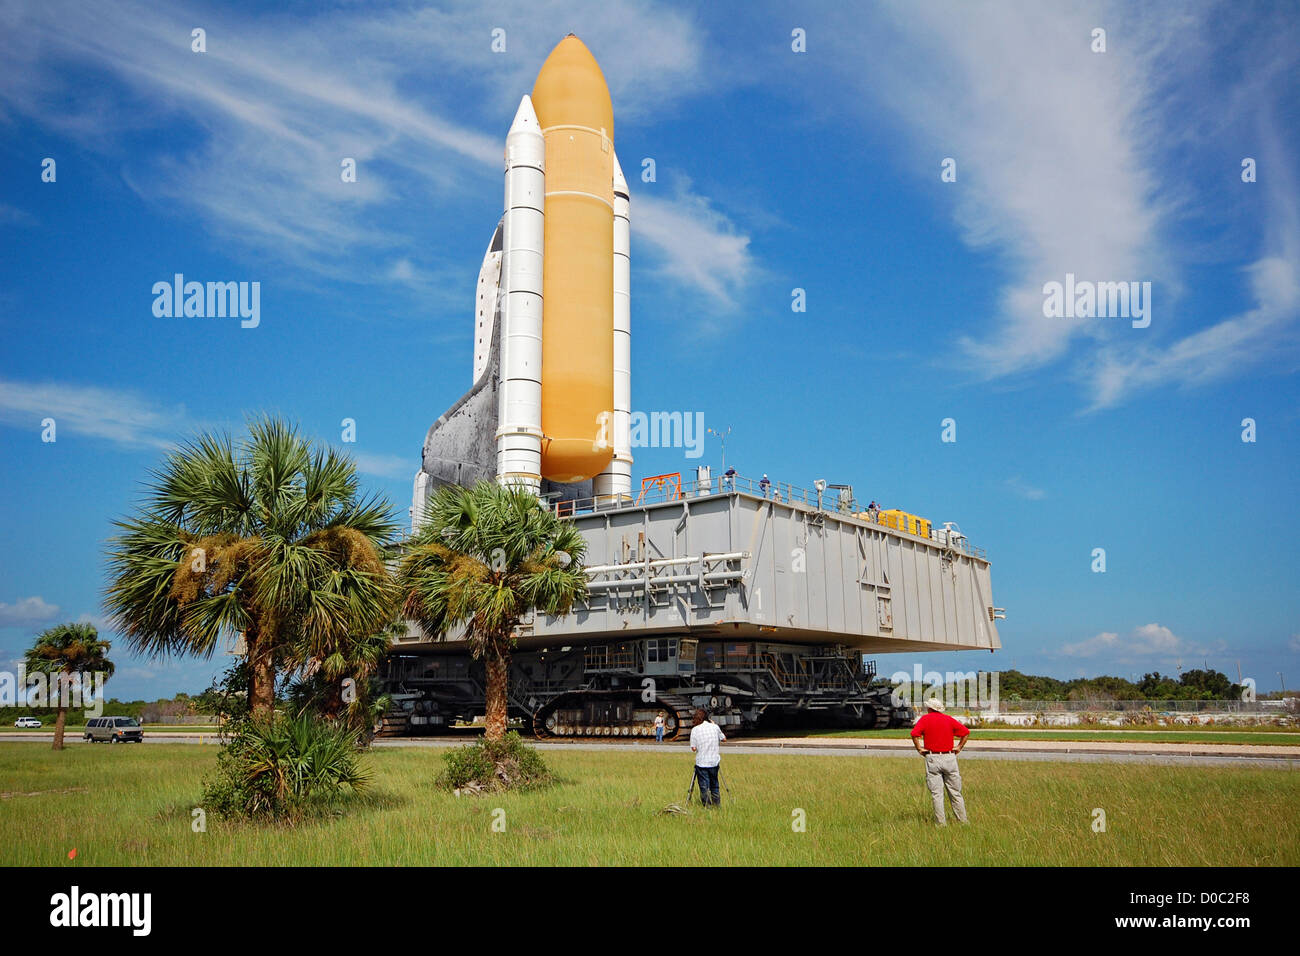 Atlantis macht 3,5 Meile sechsstündige Reise Pad 39A auf Top Crawler Transporter in Vorbereitung STS-125 letzte Mission Hubble Space Stockfoto